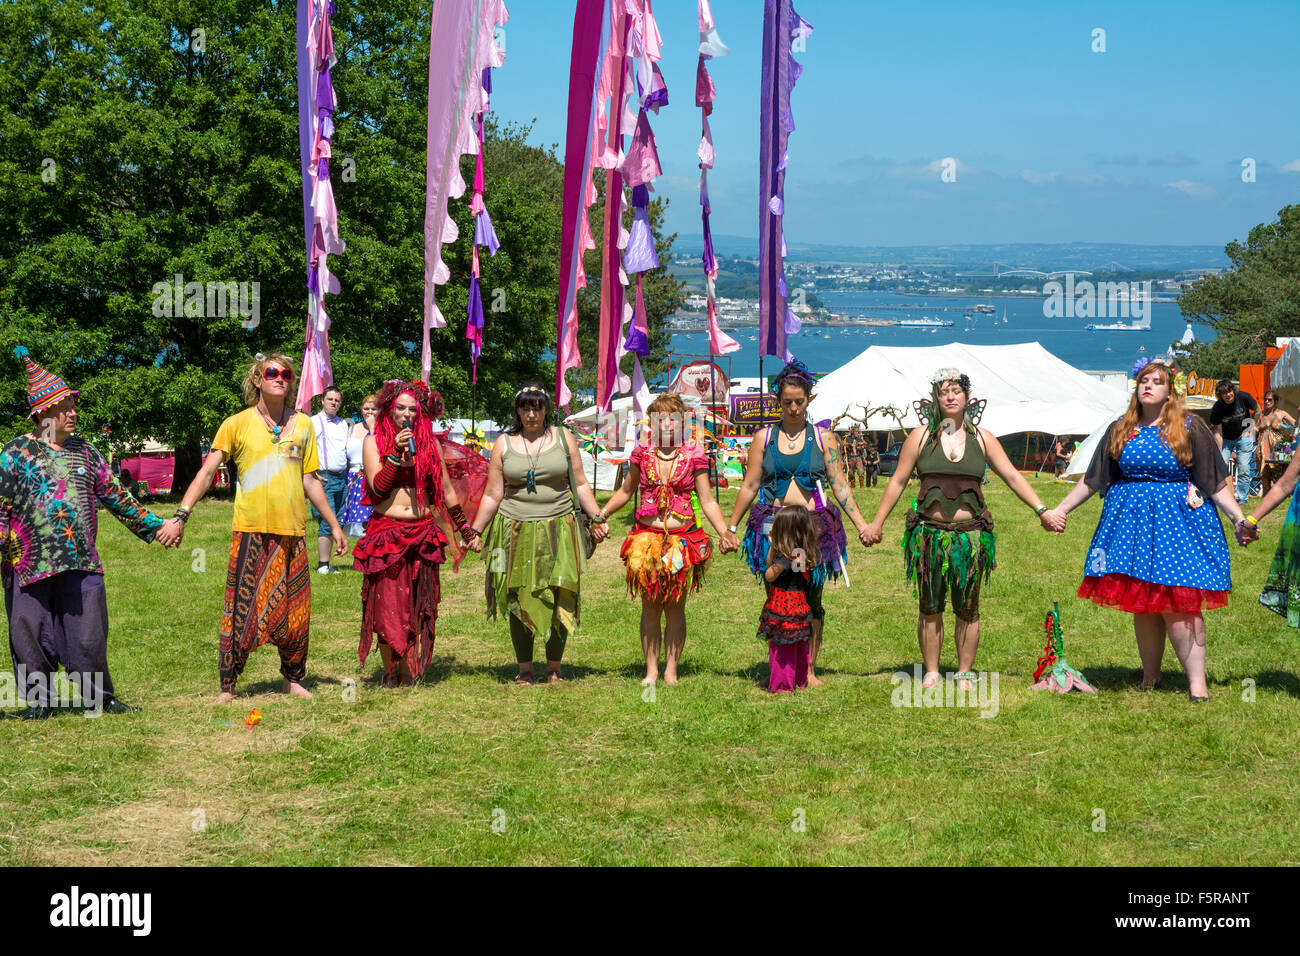 Faery Fest in Mount Edgcumbe park, Cornwall, UK Stock Photo